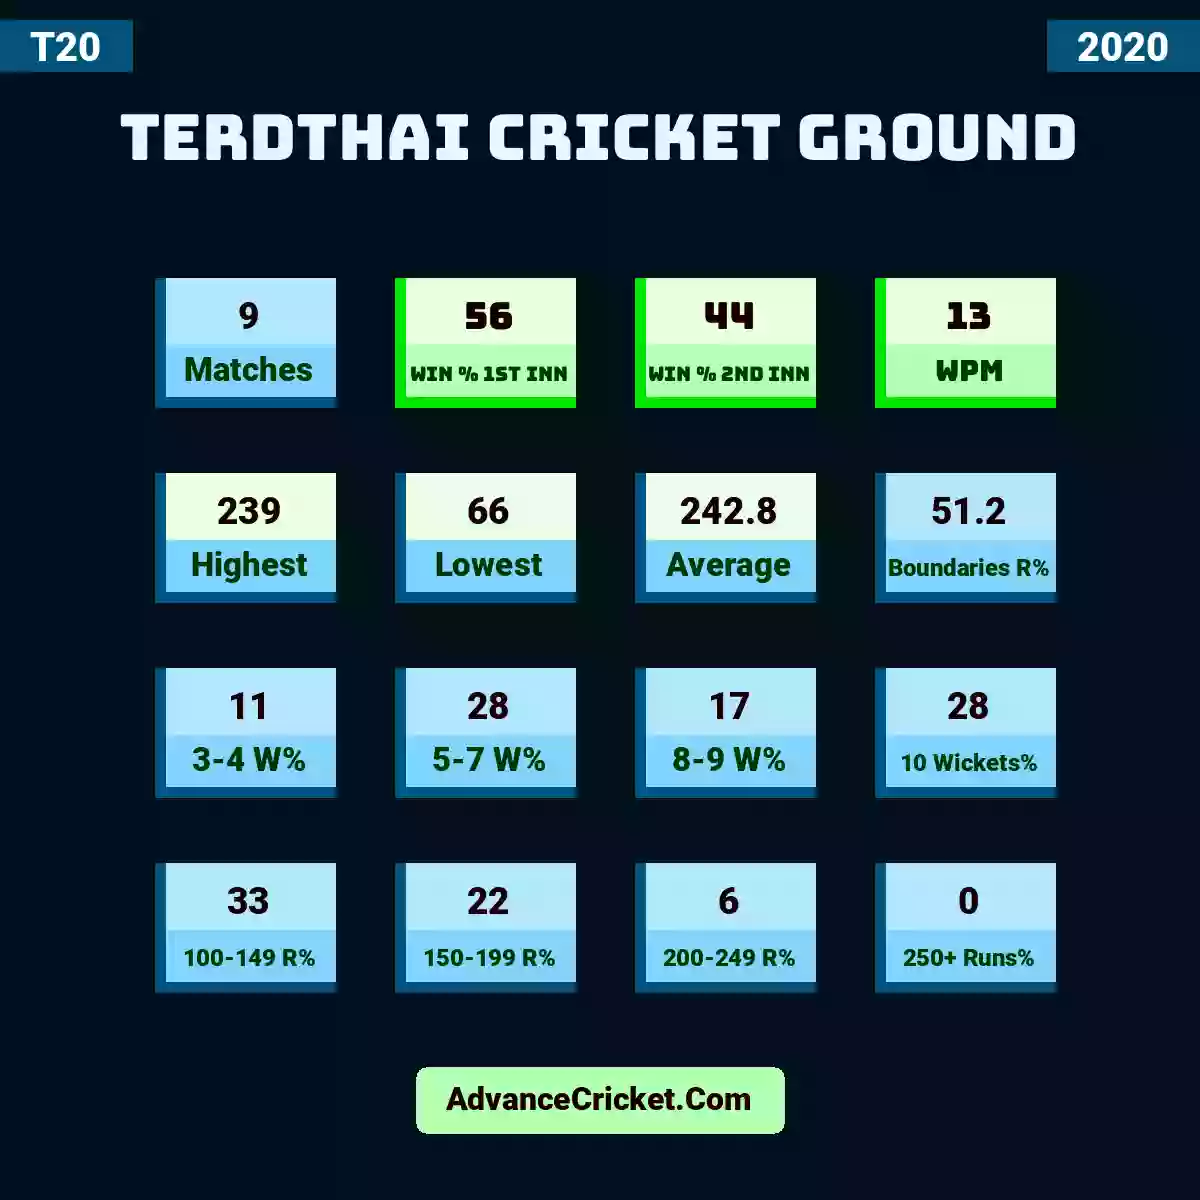 Image showing Terdthai Cricket Ground with Matches: 9, Win % 1st Inn: 56, Win % 2nd Inn: 44, WPM: 13, Highest: 239, Lowest: 66, Average: 242.8, Boundaries R%: 51.2, 3-4 W%: 11, 5-7 W%: 28, 8-9 W%: 17, 10 Wickets%: 28, 100-149 R%: 33, 150-199 R%: 22, 200-249 R%: 6, 250+ Runs%: 0.